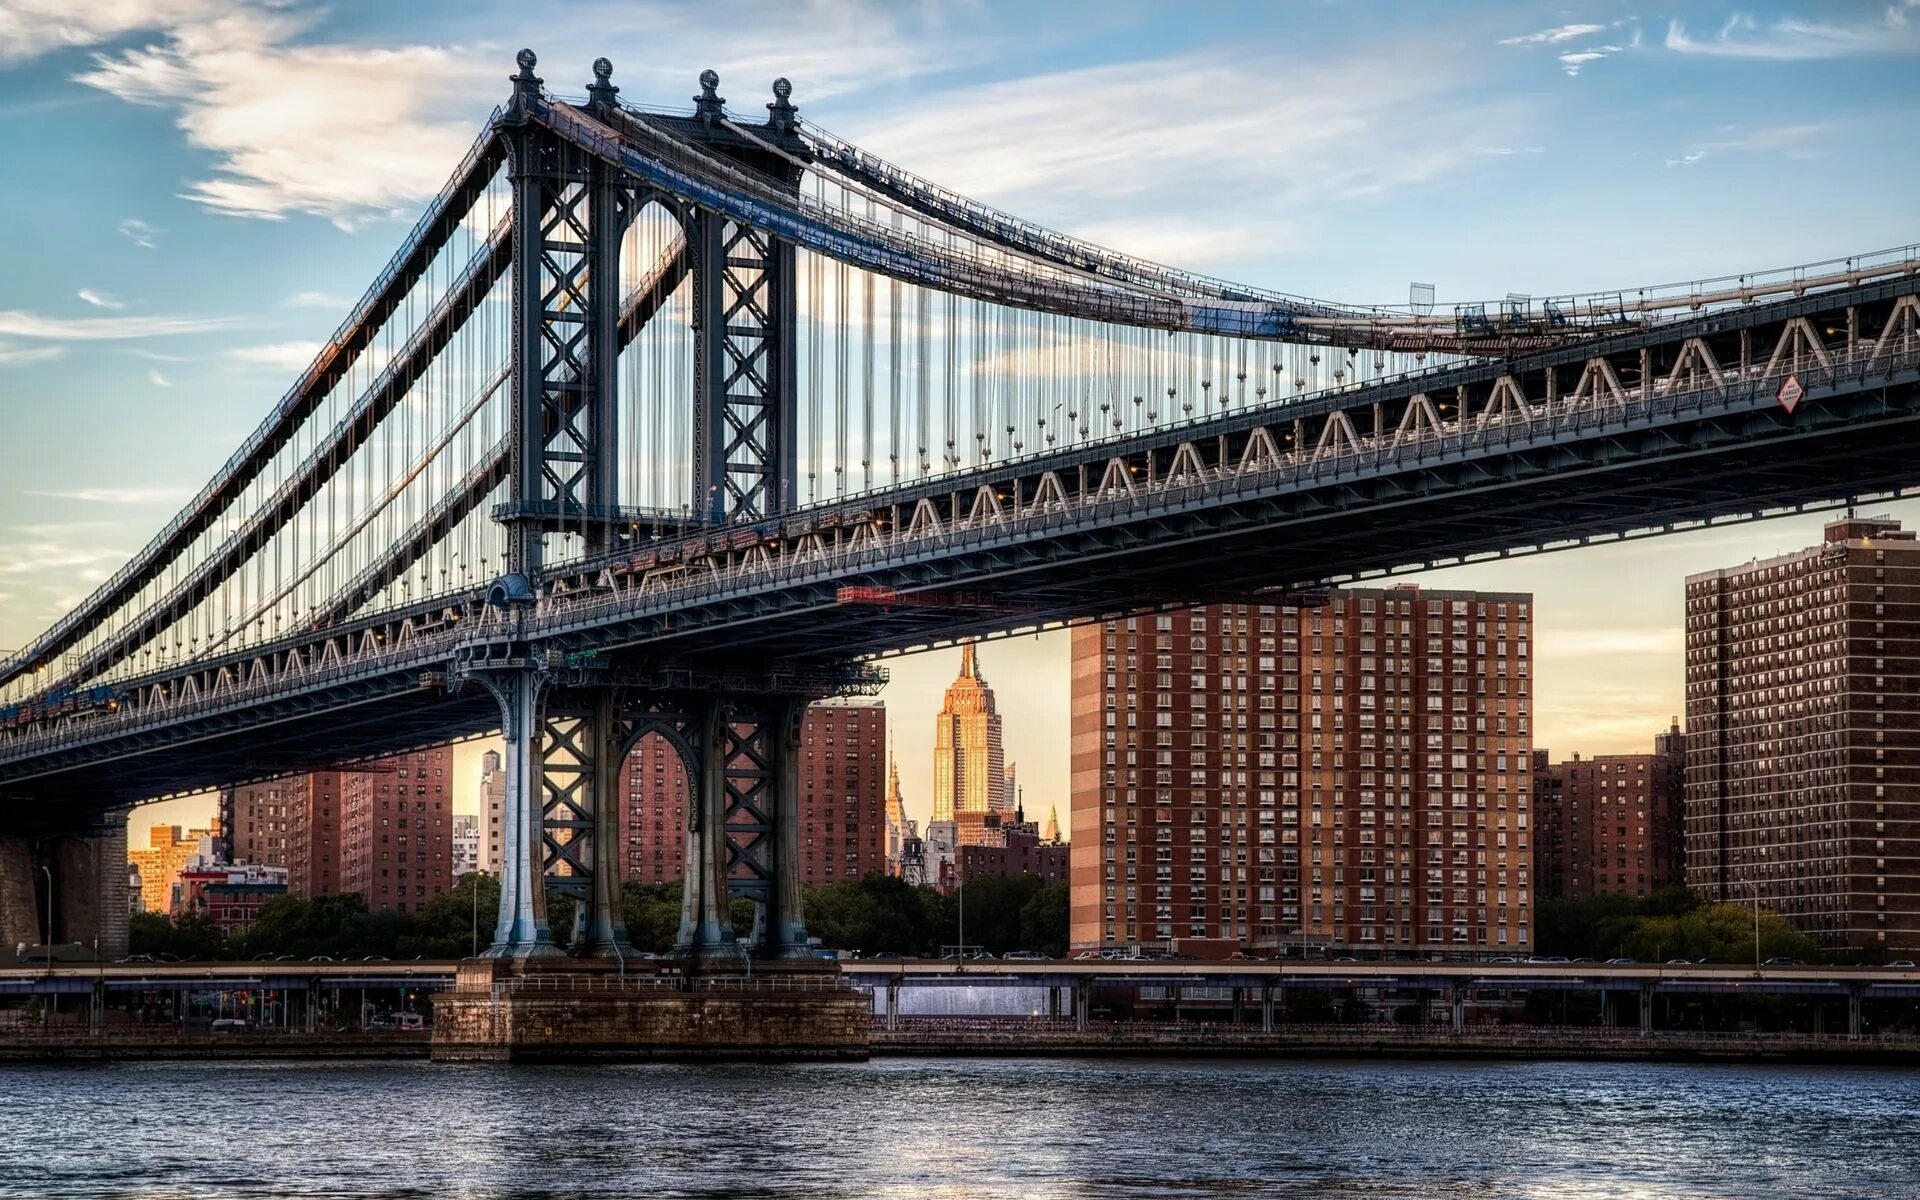 Most high first. Манхэттенский мост в Нью-Йорке. Бру́клинский мост в Нью-Йорке. Бруклинский мост Манхеттен в Нью-Йорке. “Манхэттен бридж”. Моста в Нью Йорке.